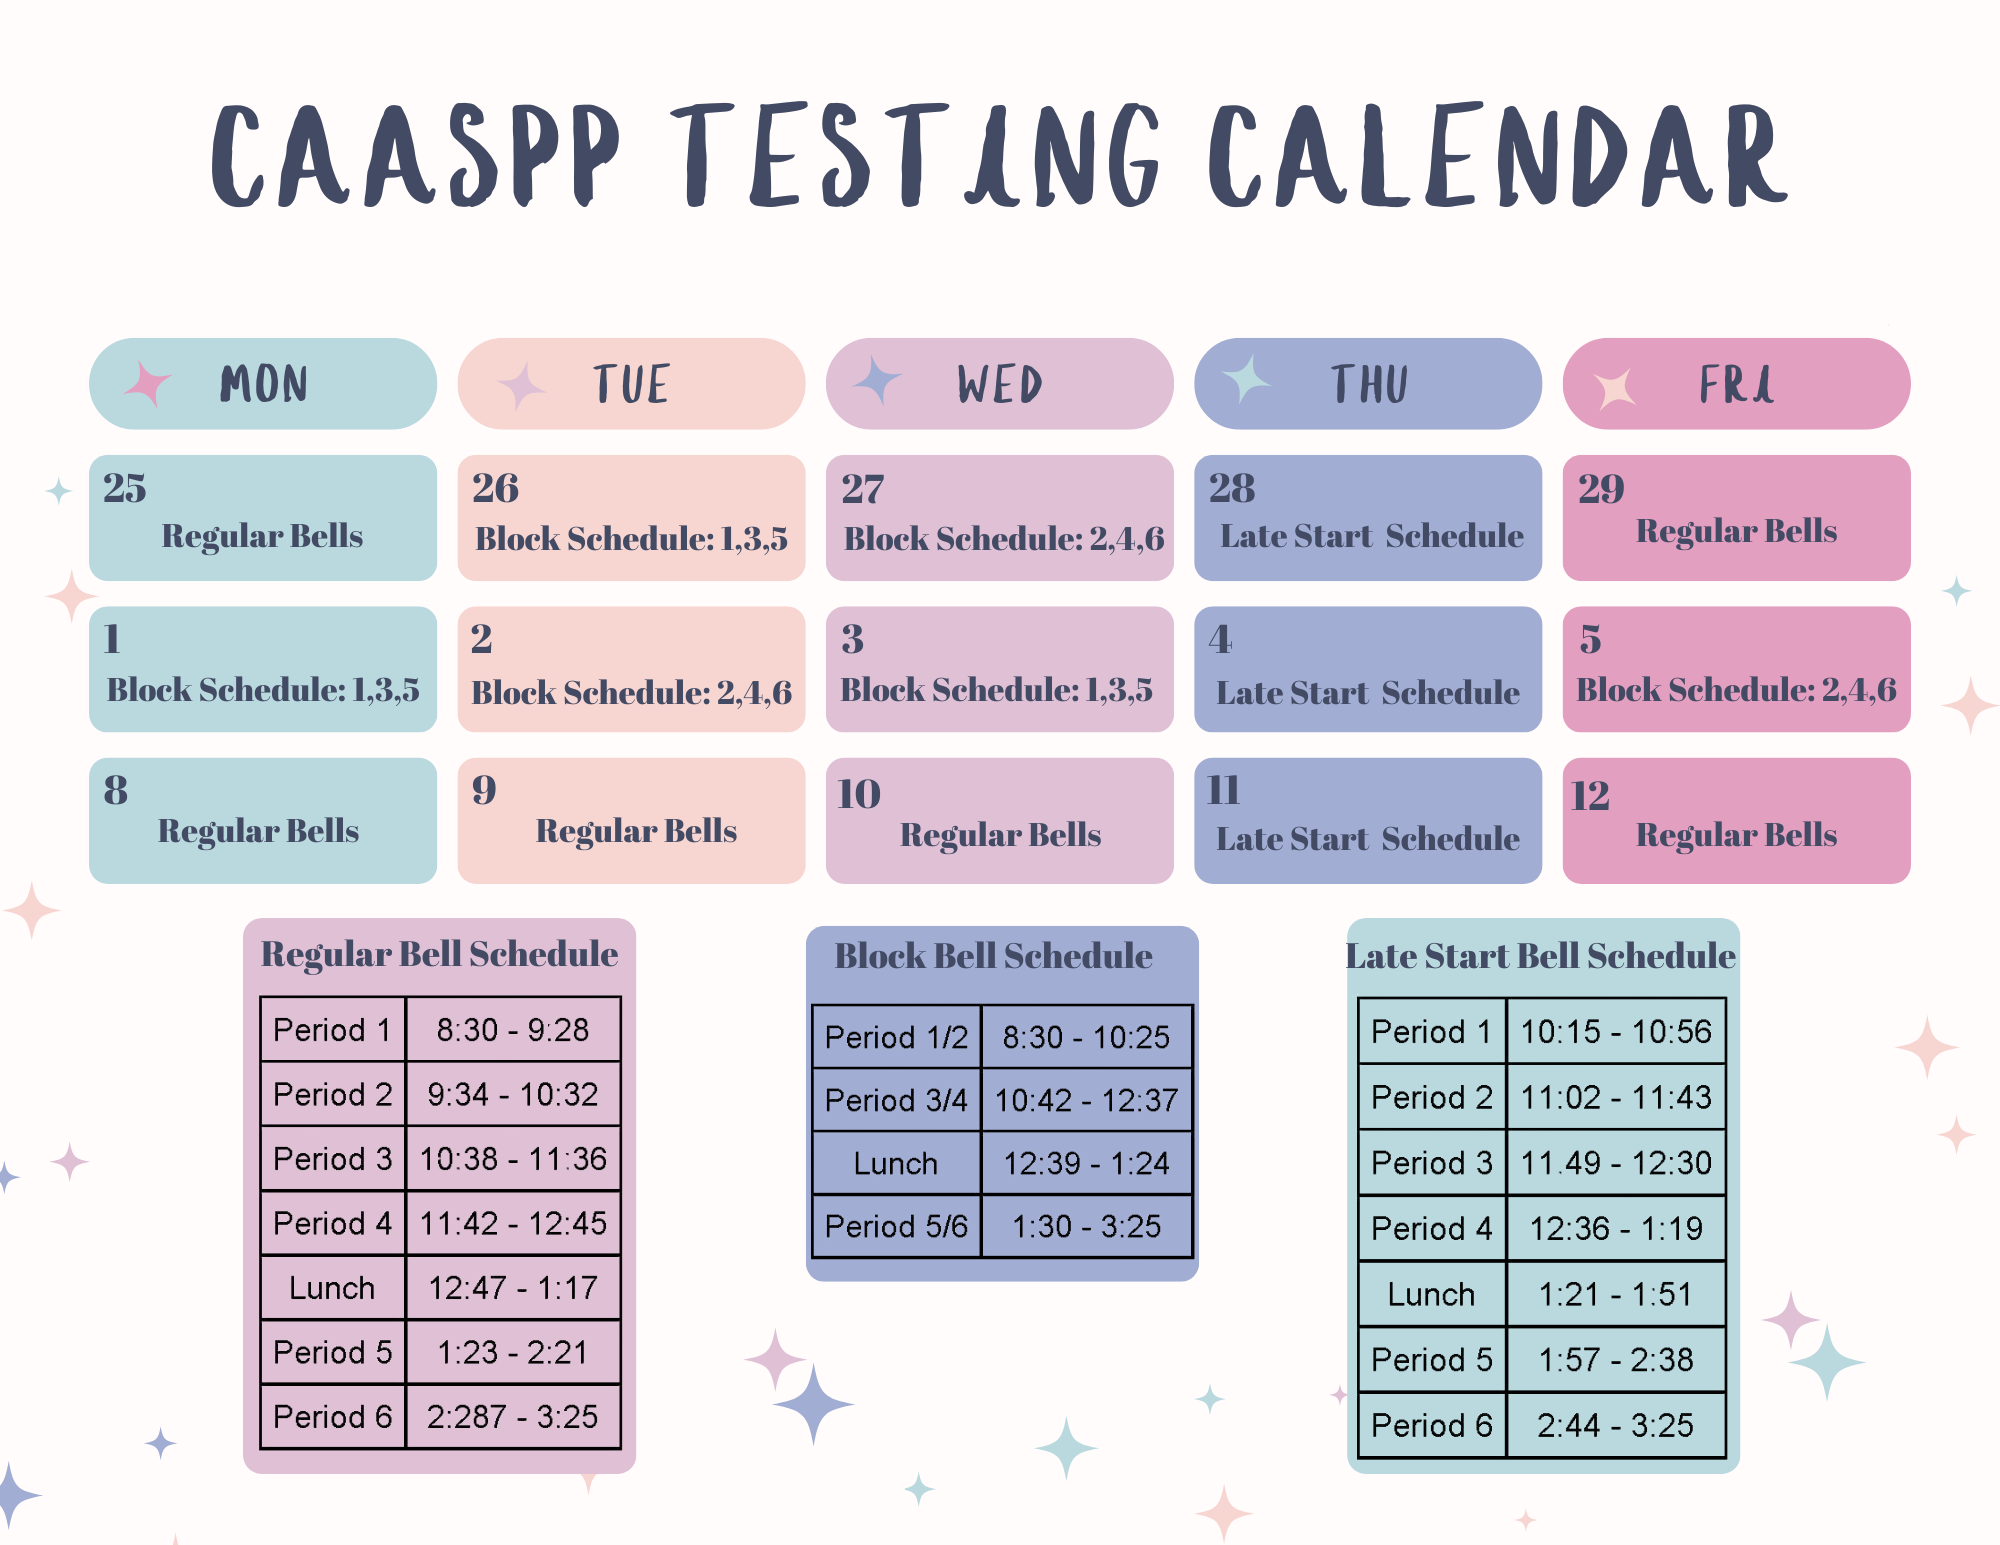 CAASPP Testing Calendar.png